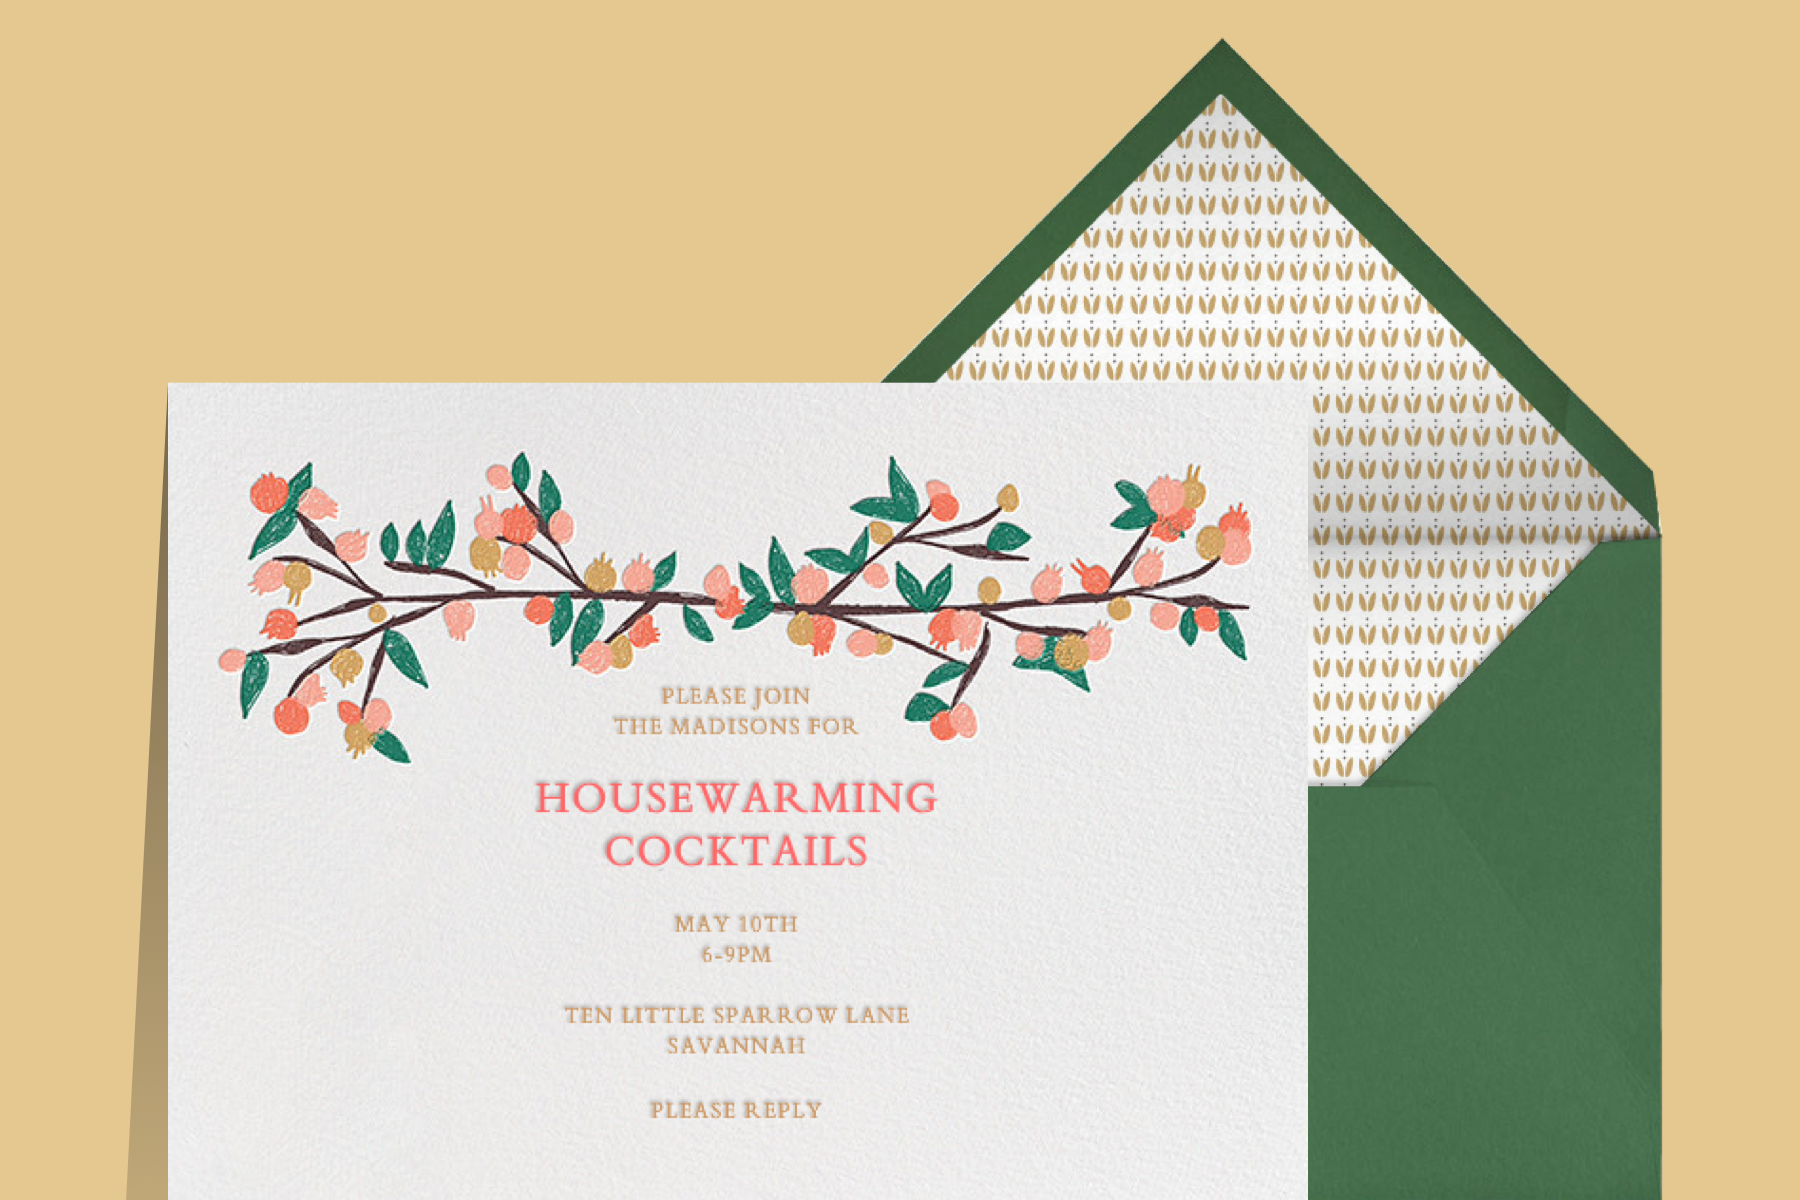 house warming invitation